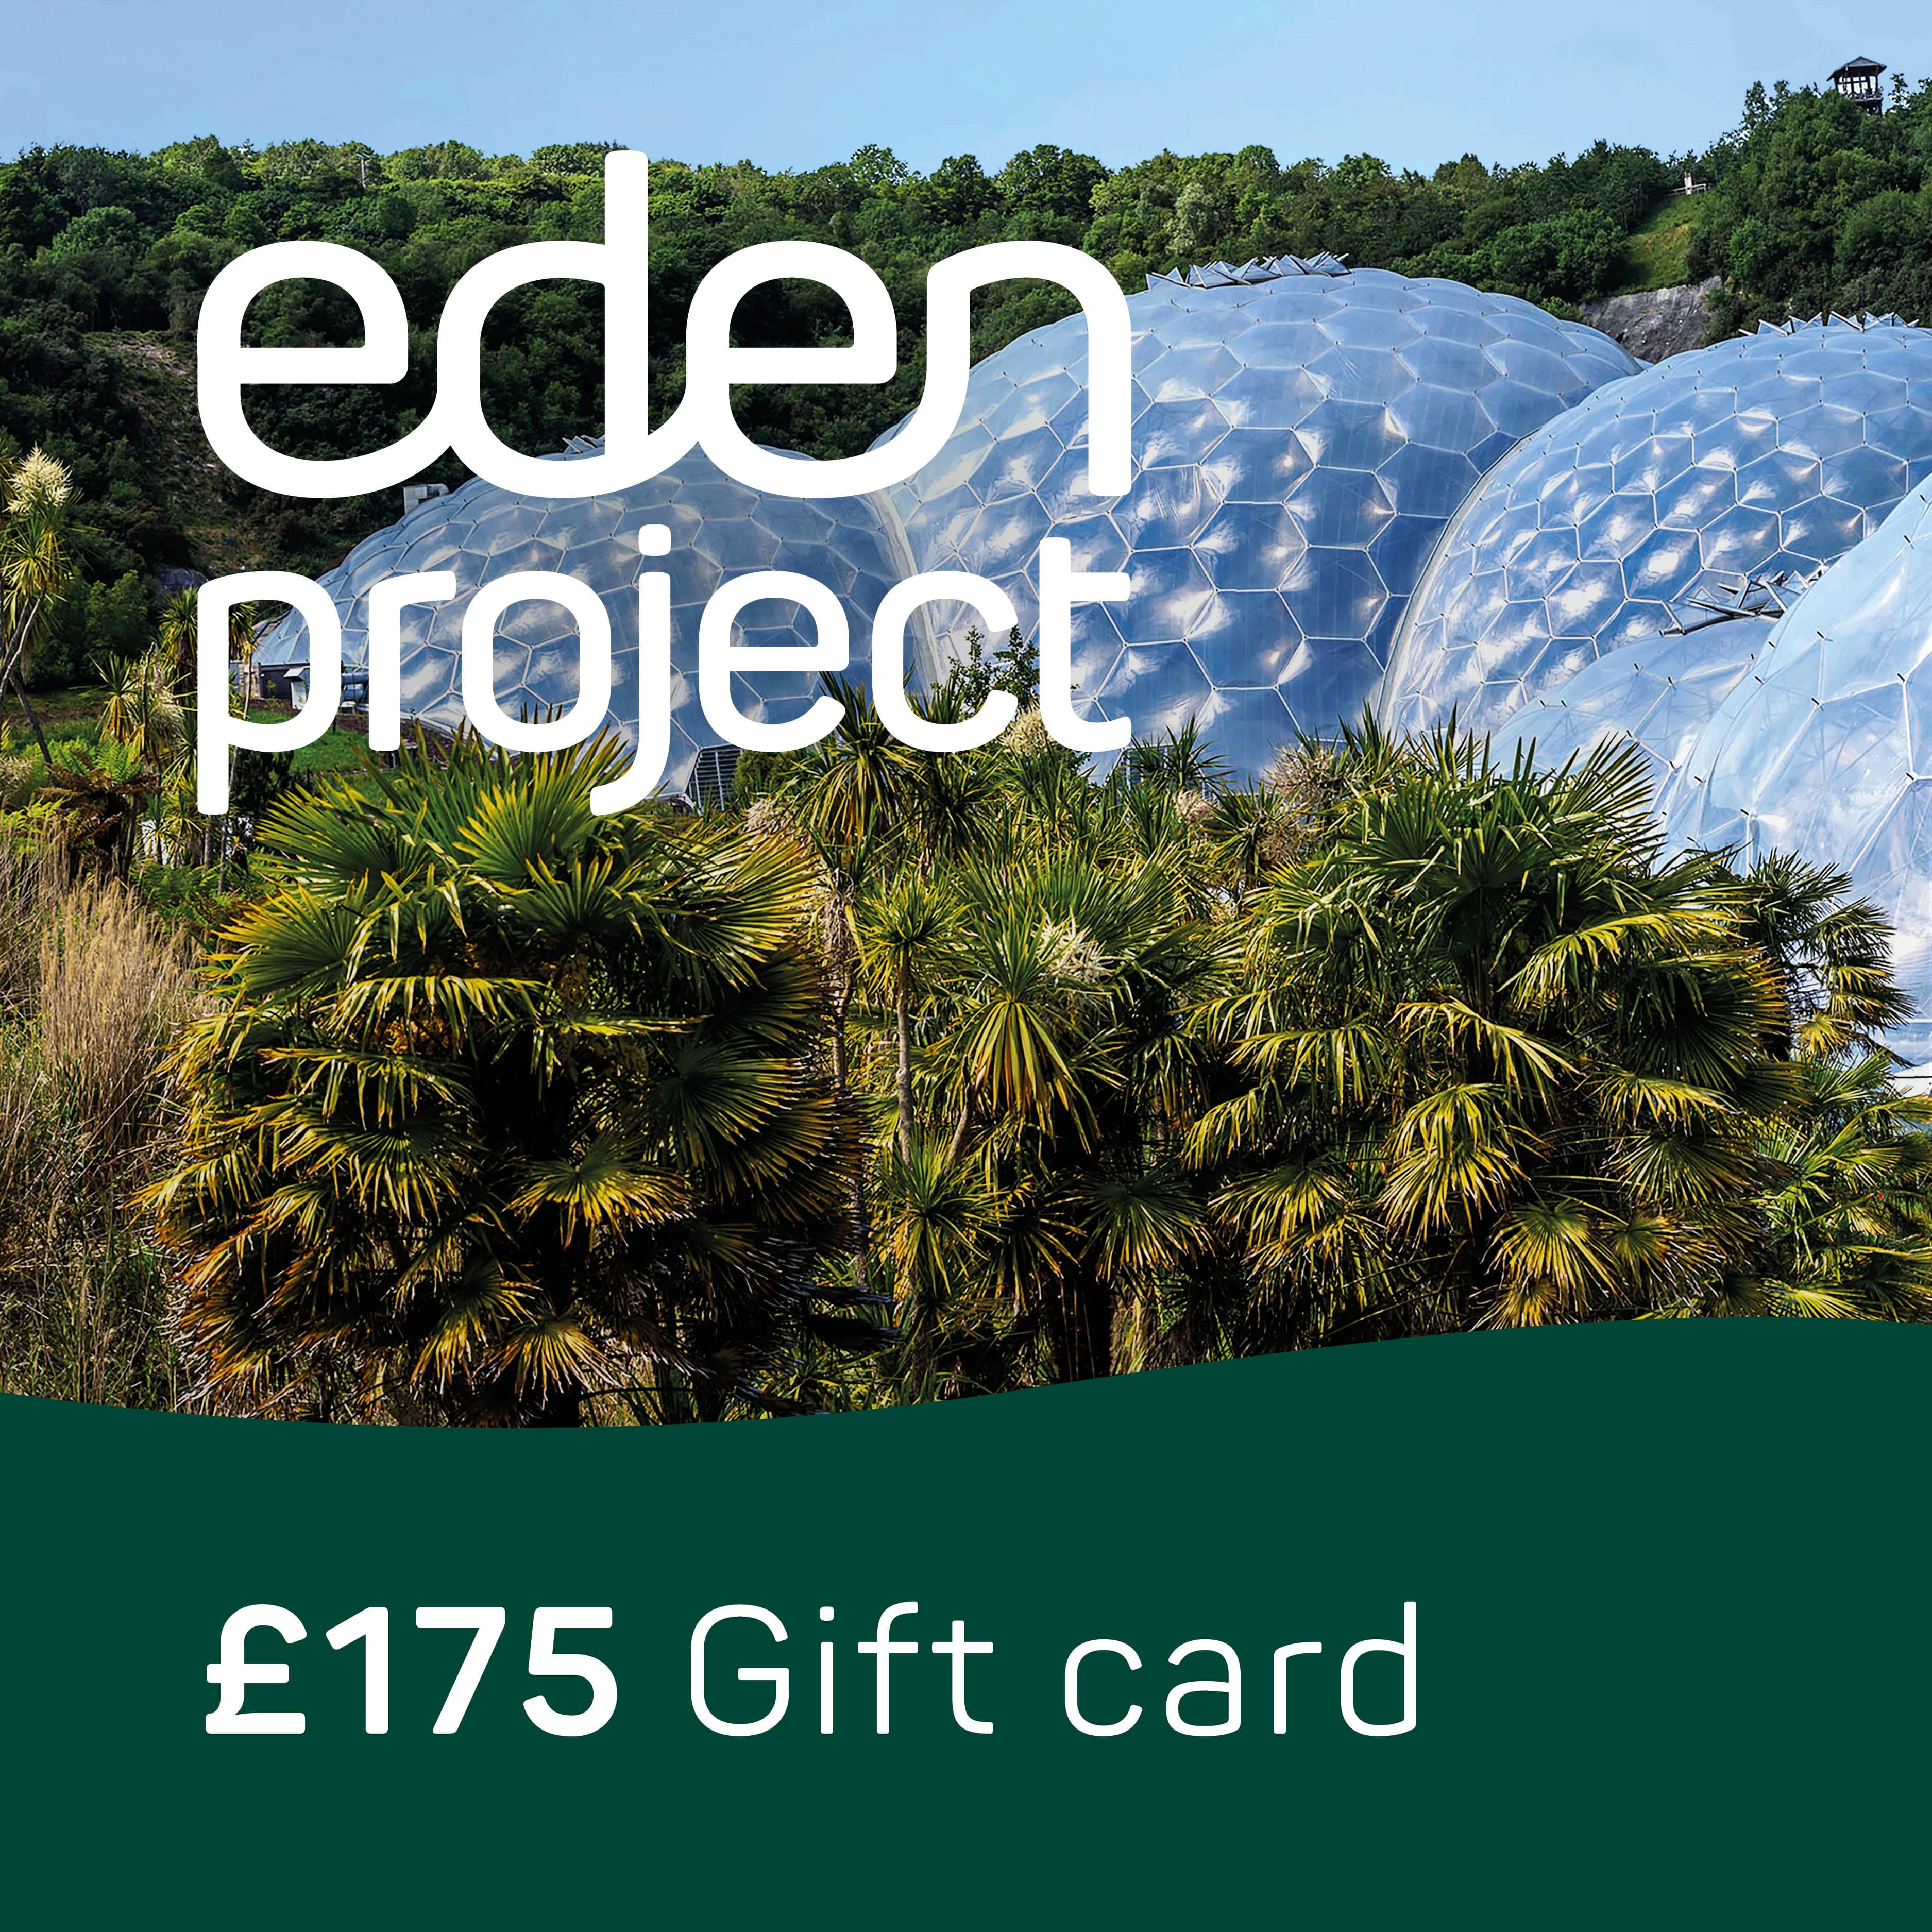 Eden Project Shop Gift card